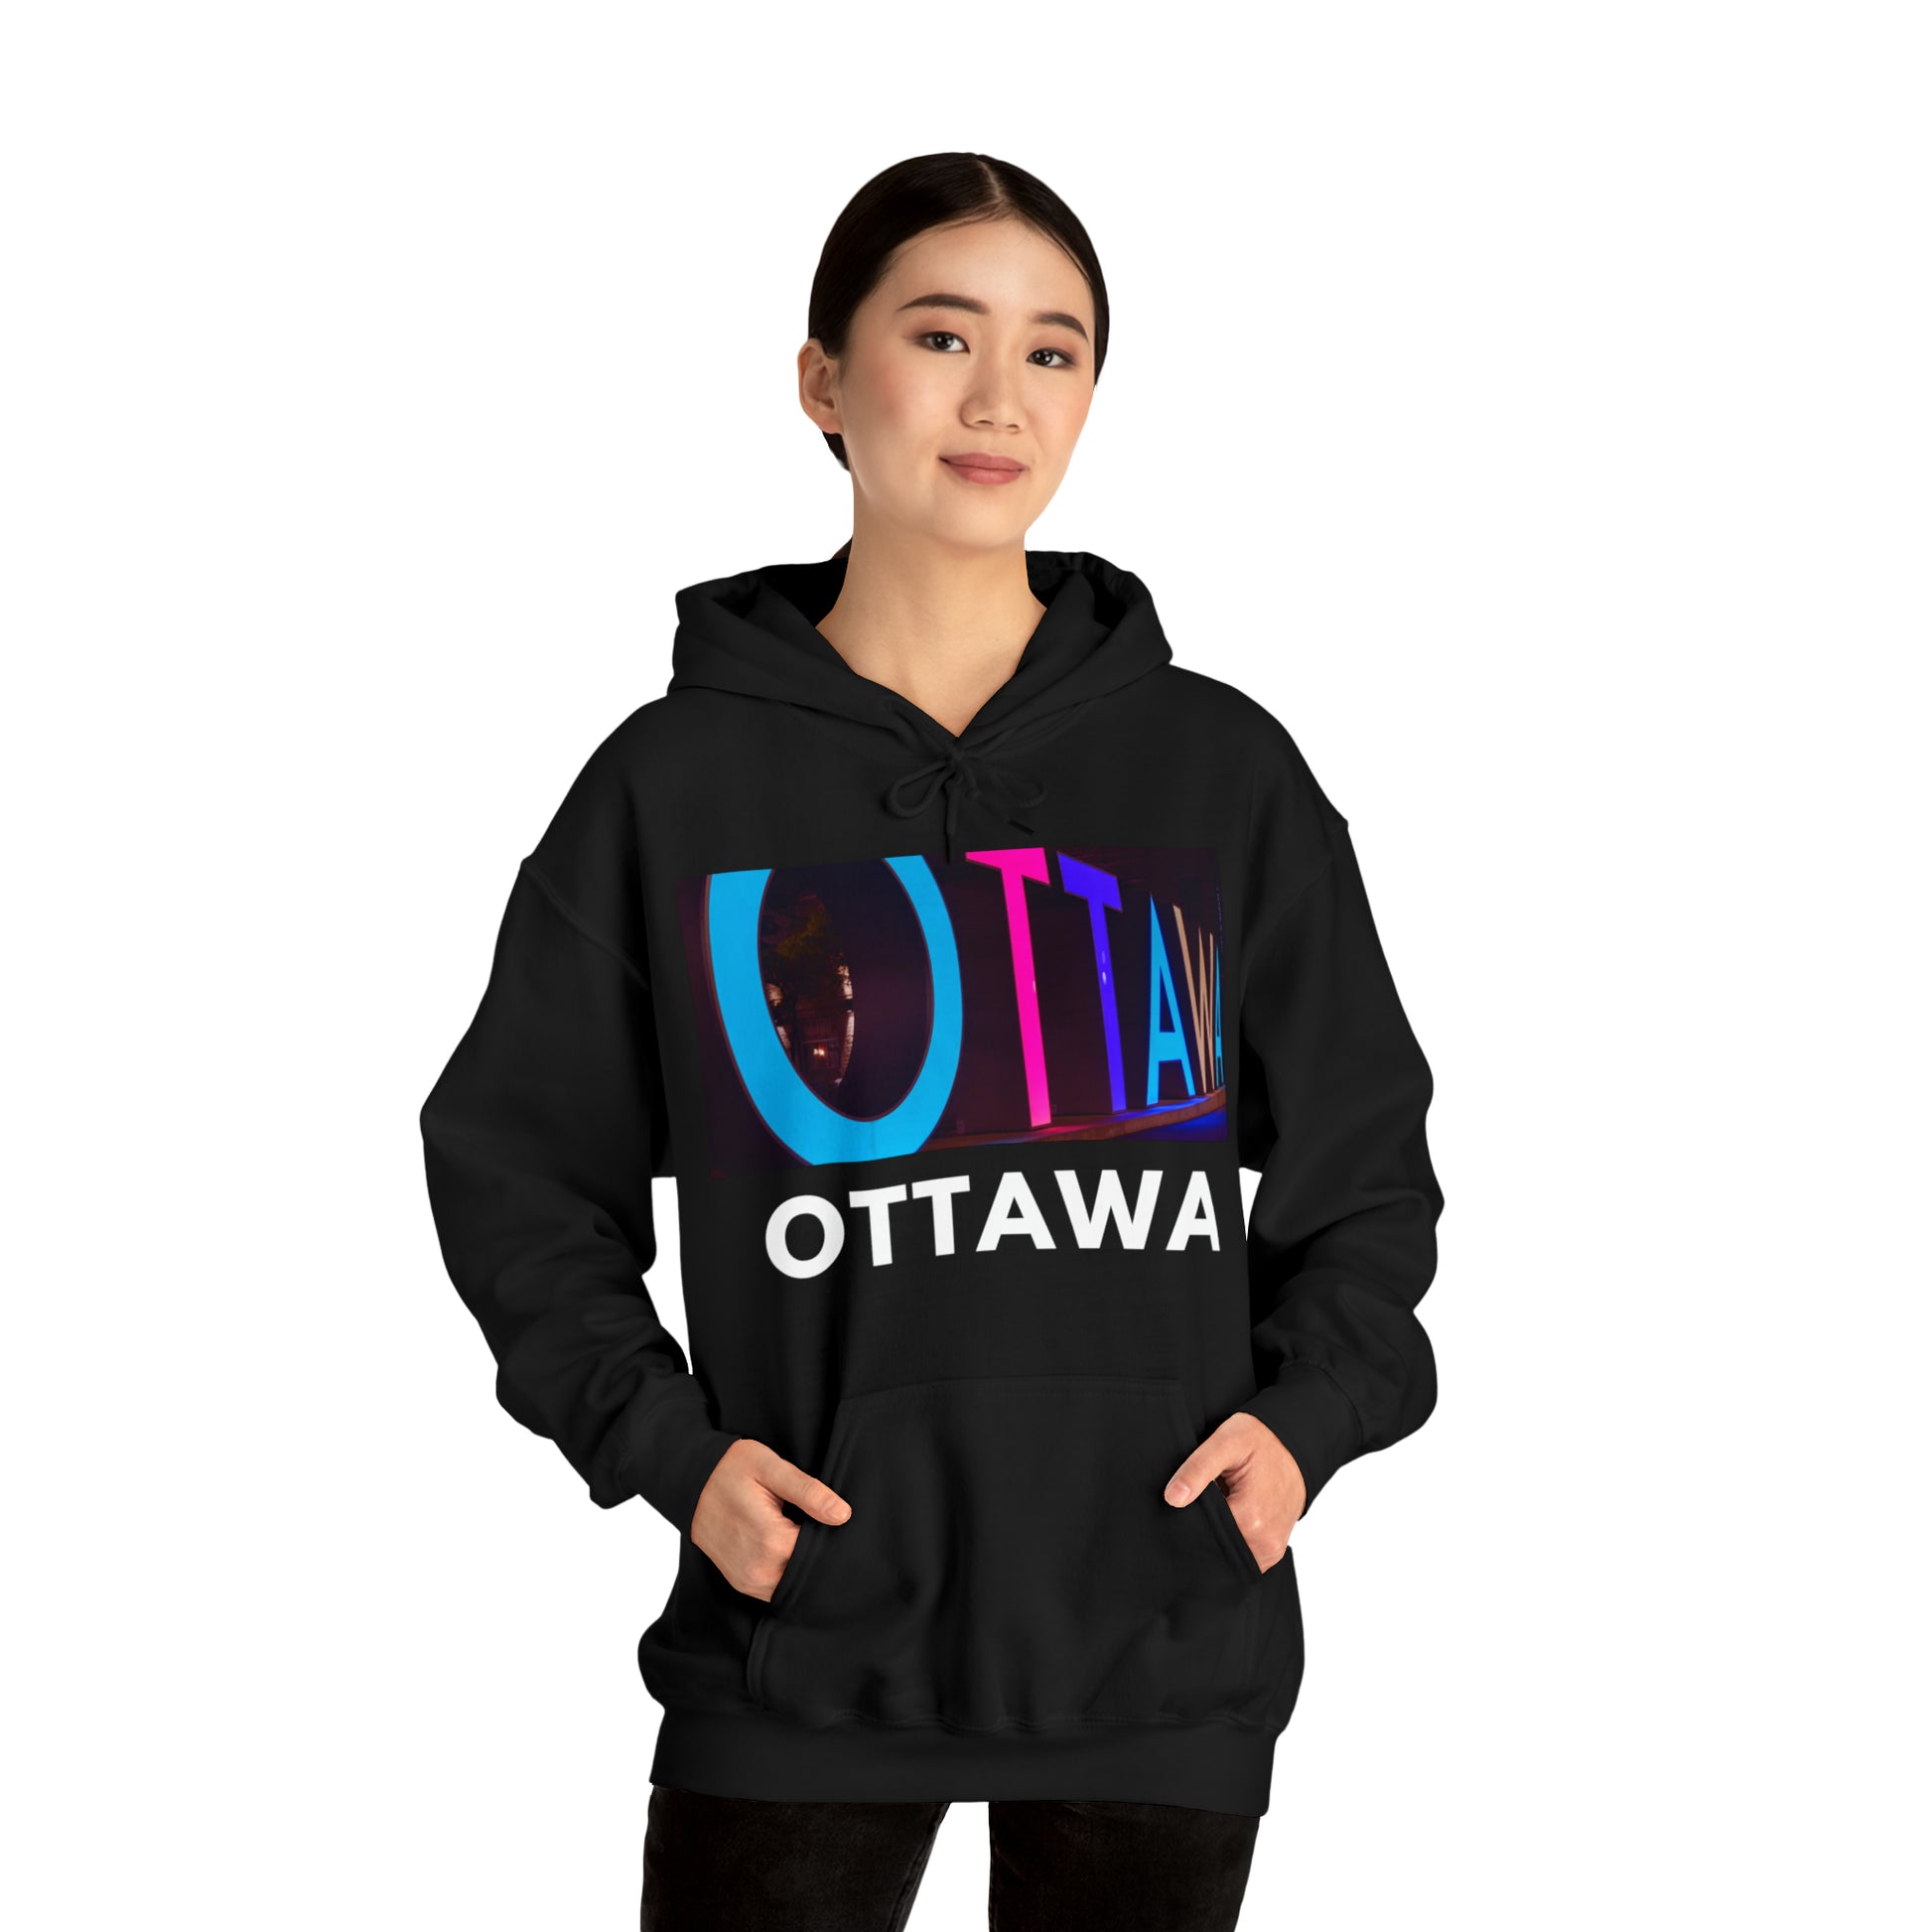   Ottawa Hoodie: Lit Up from HoodySZN.com